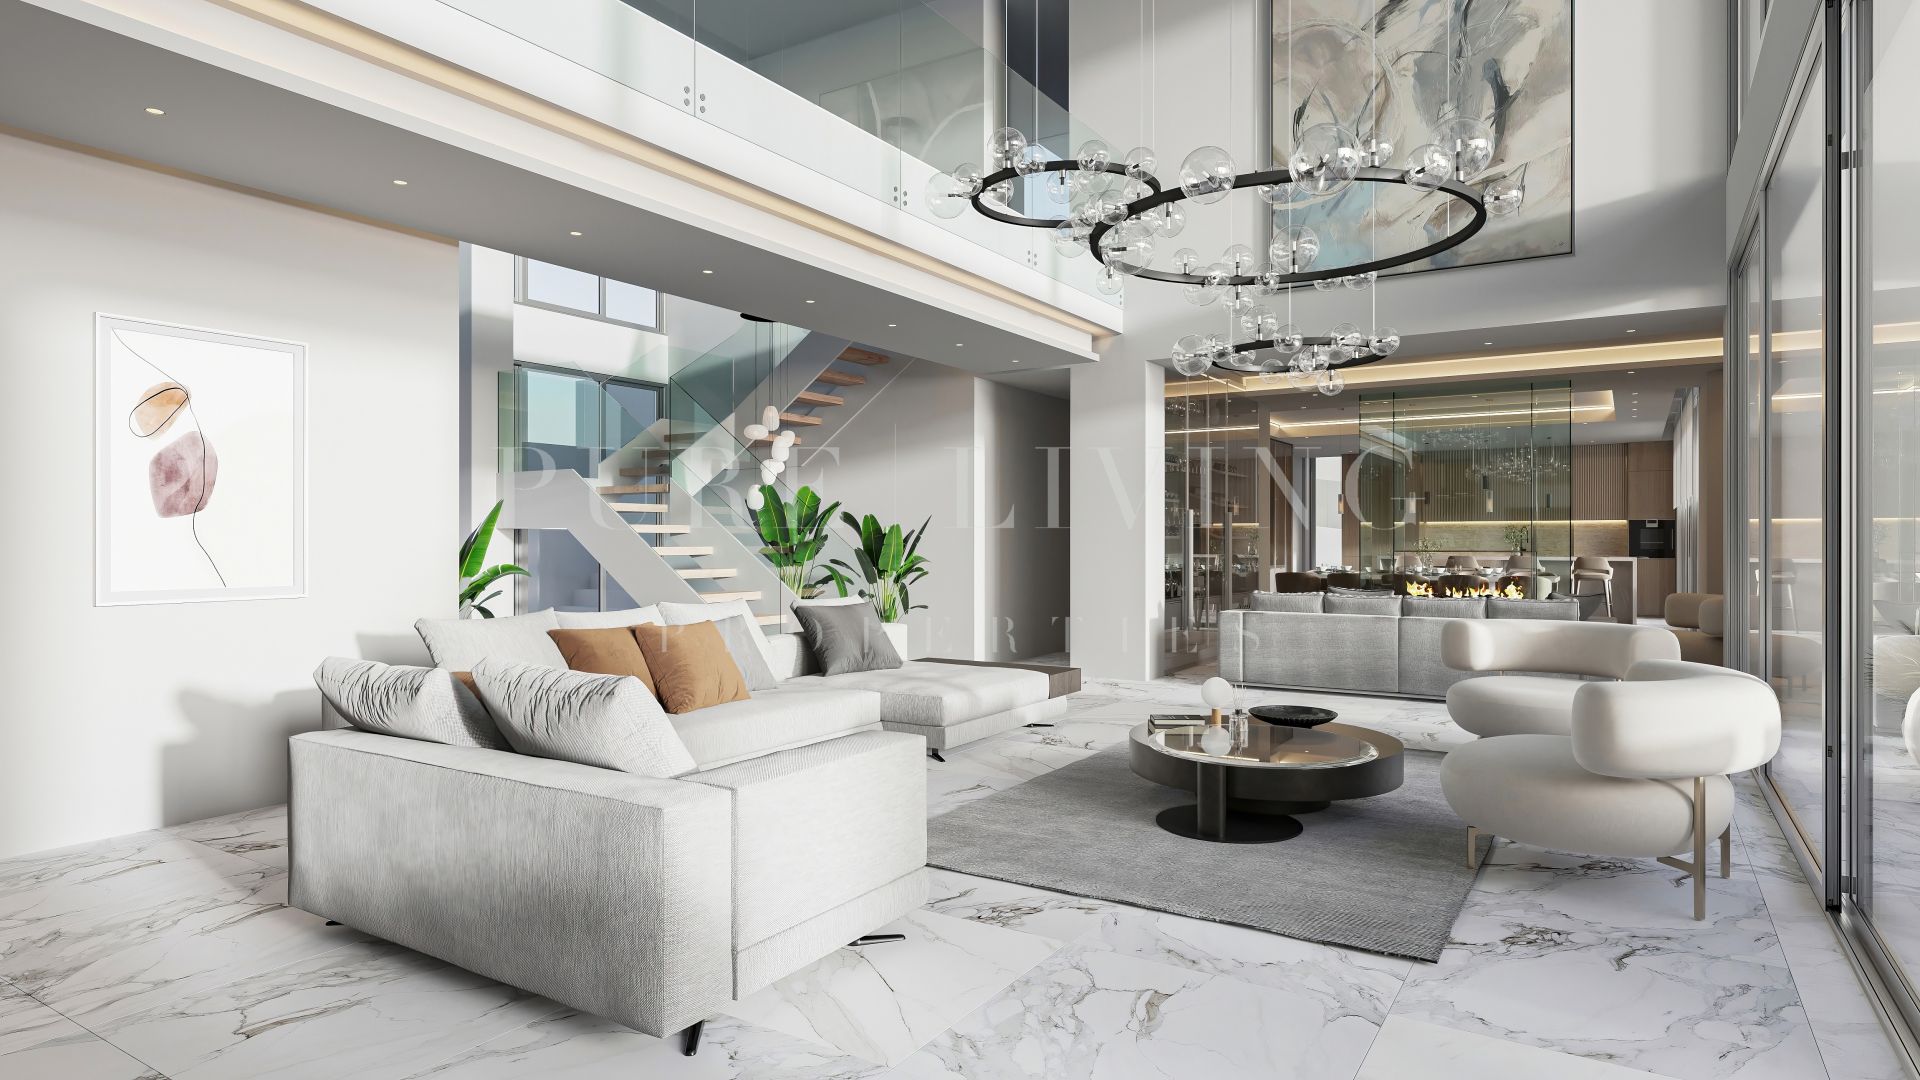 Brand new contemporary six bedroom luxury villa for sale in Paraiso Alto